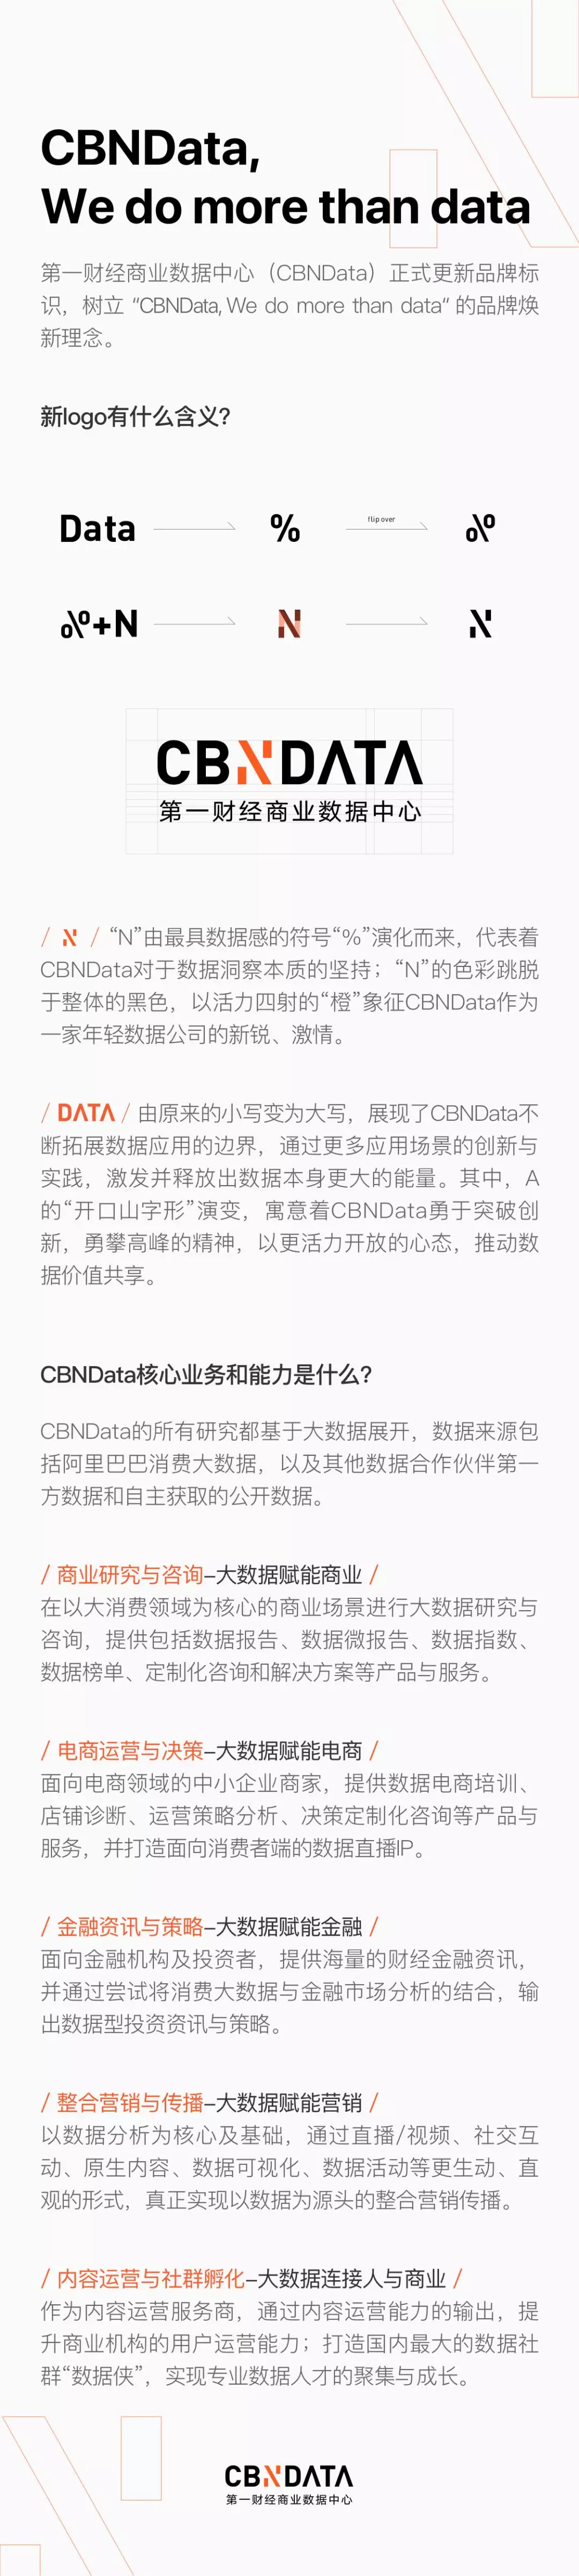 We do more than data！CBNData发布全新品牌标识